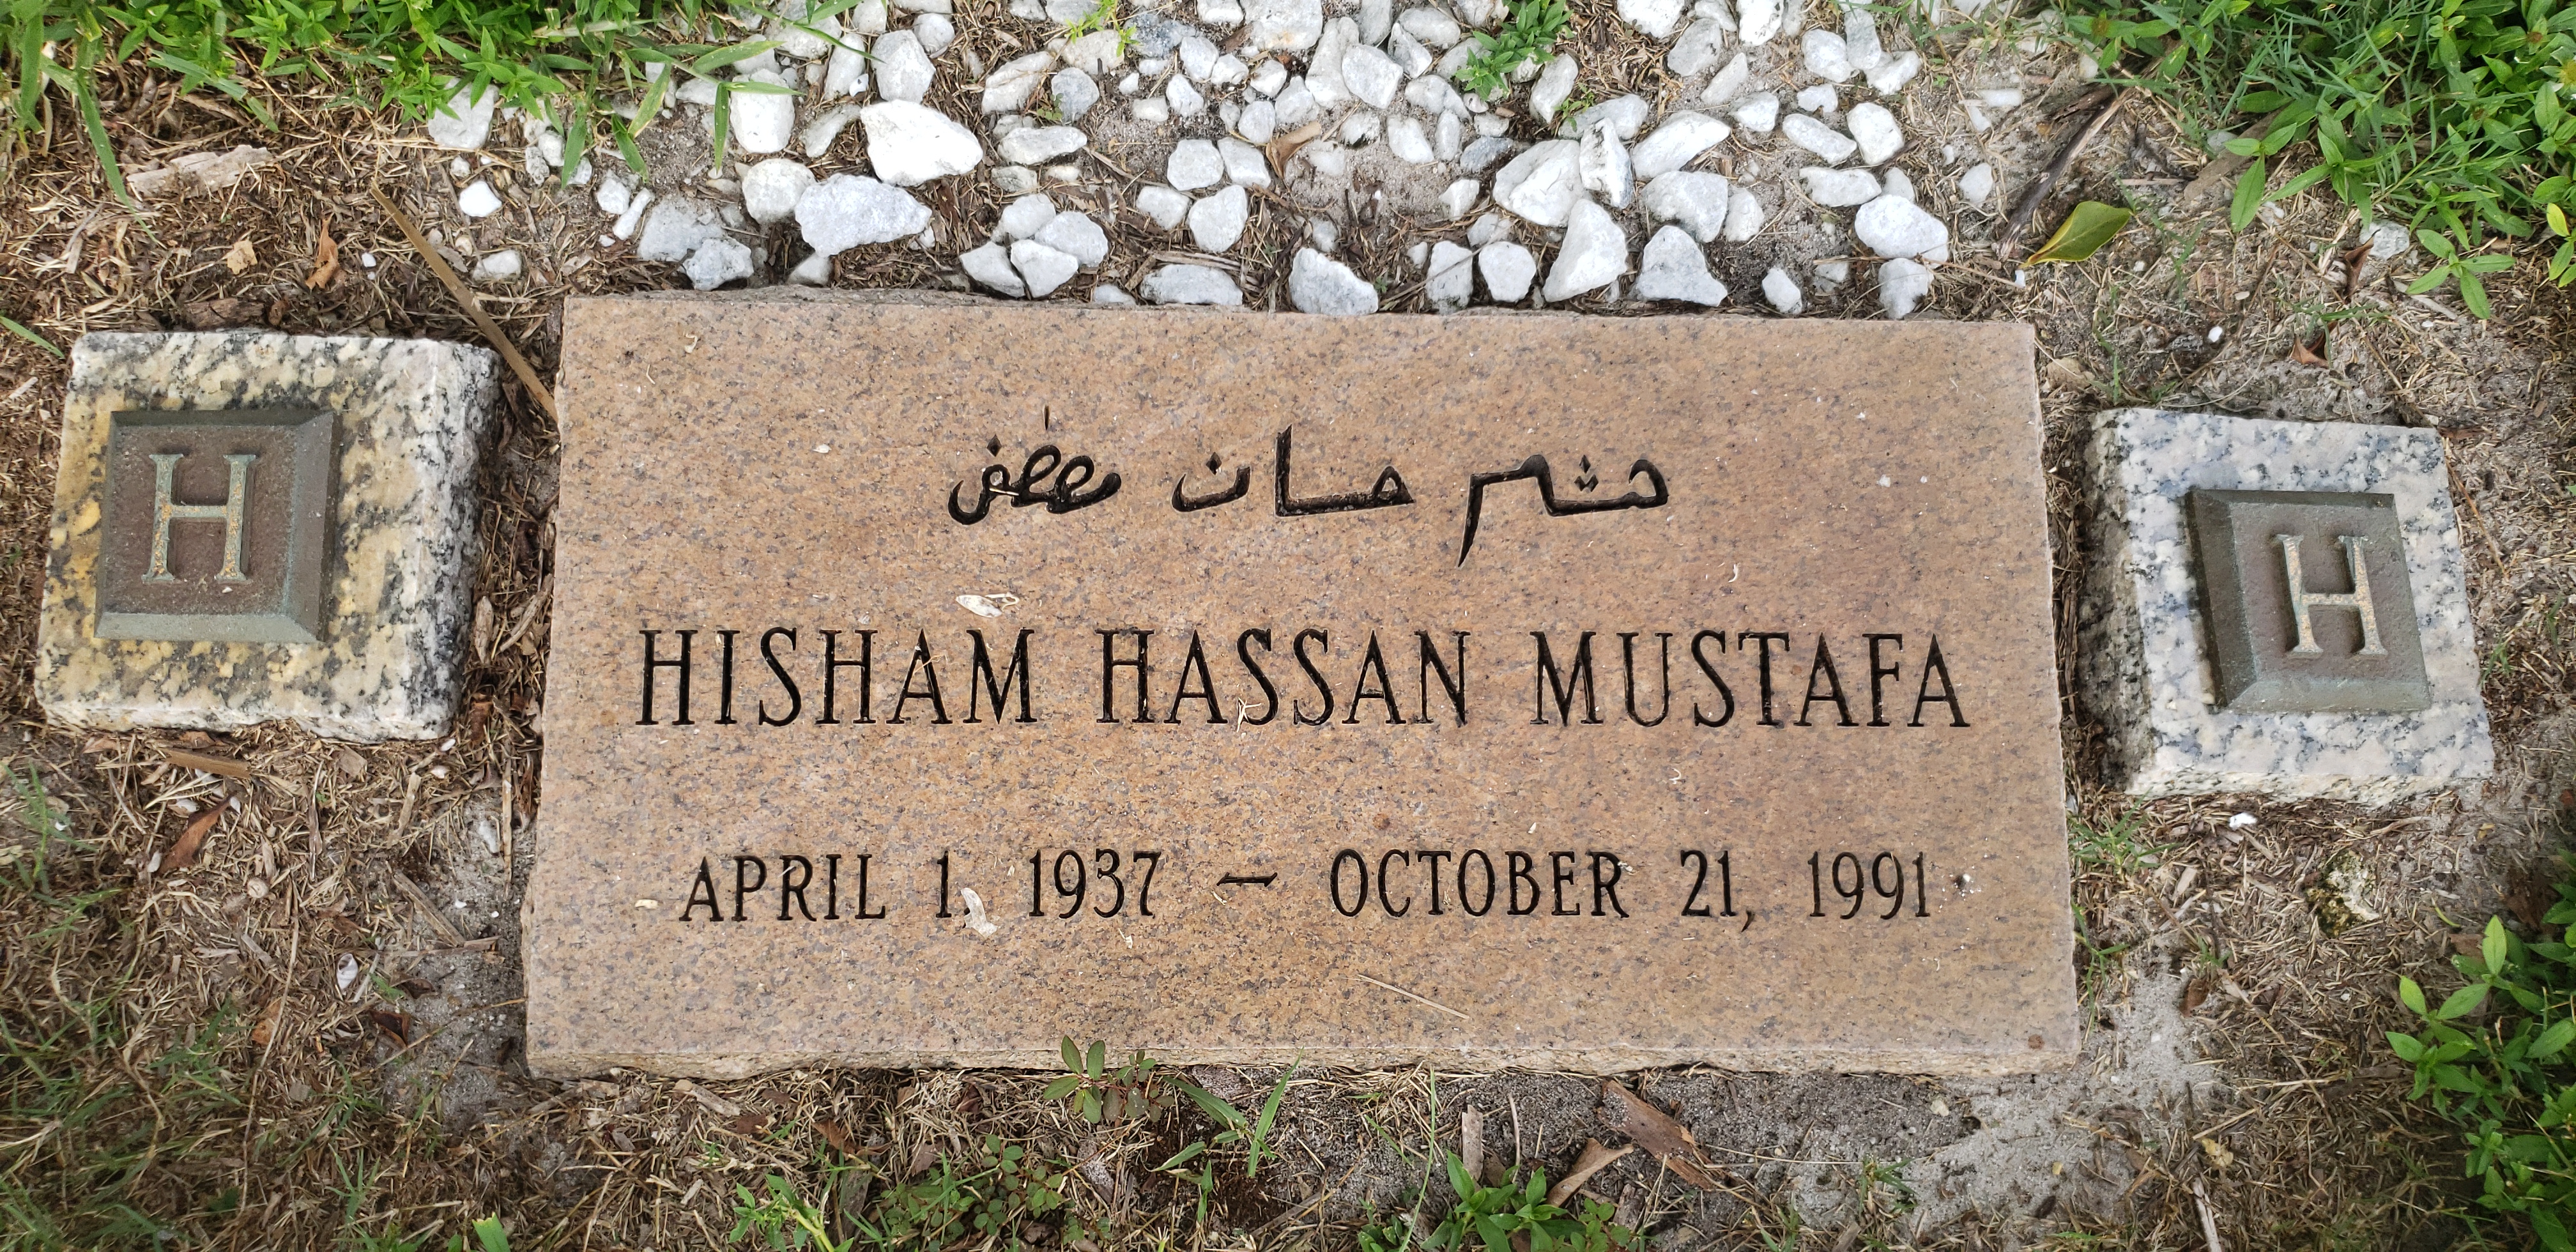 Hisham Hassan Mustafa